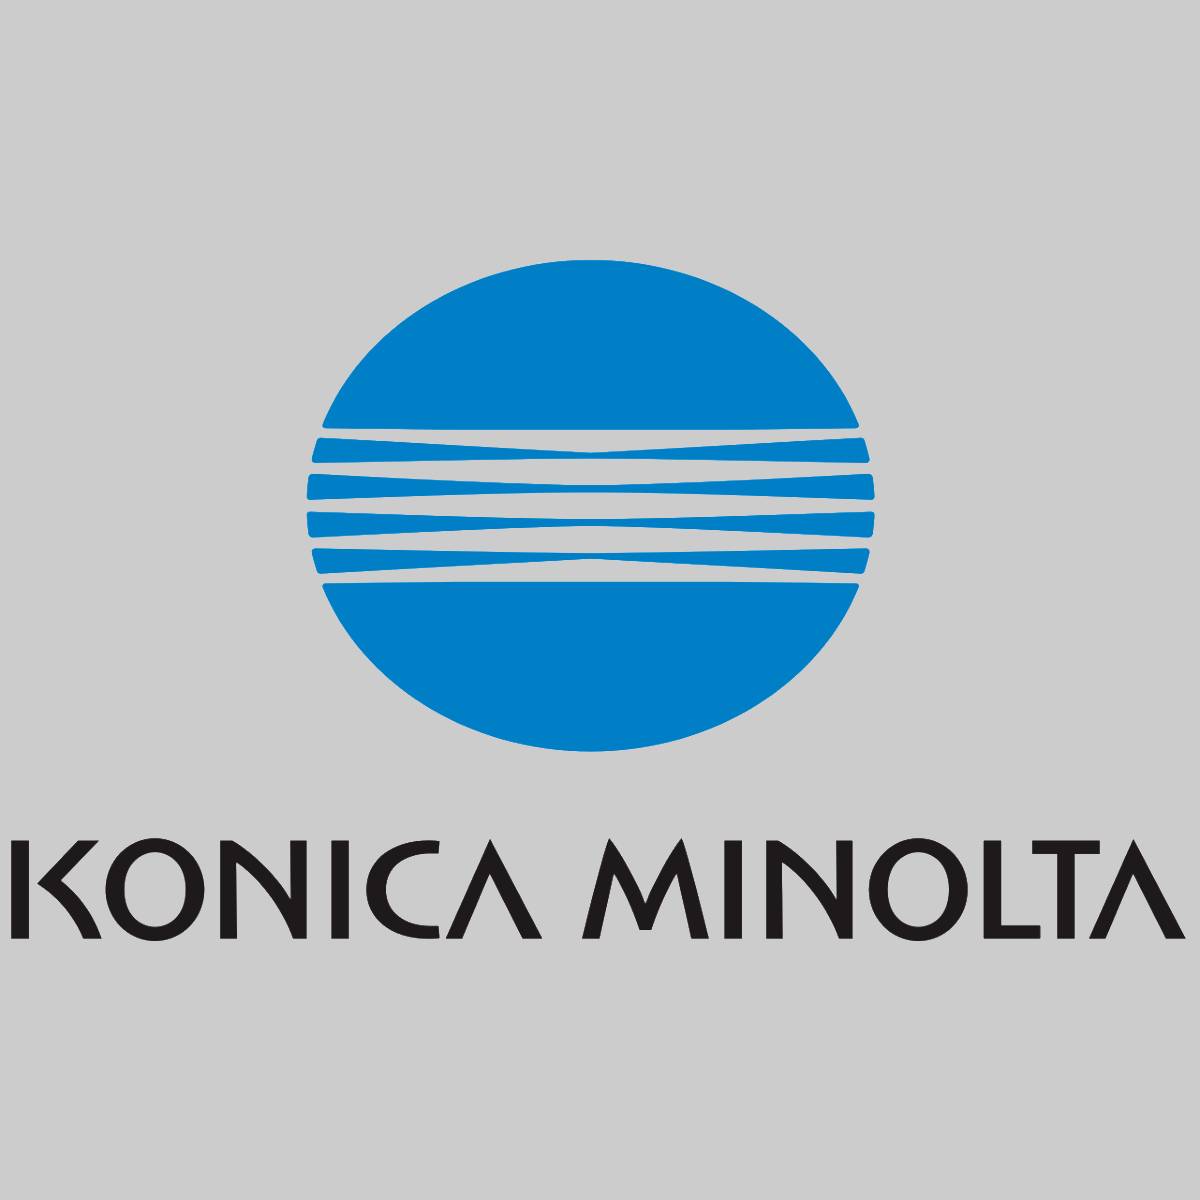 "Unité d'alimentation d'origine Konica Minolta Assy 13QNR70100 Bizhub PRO C6000 NEU OVP